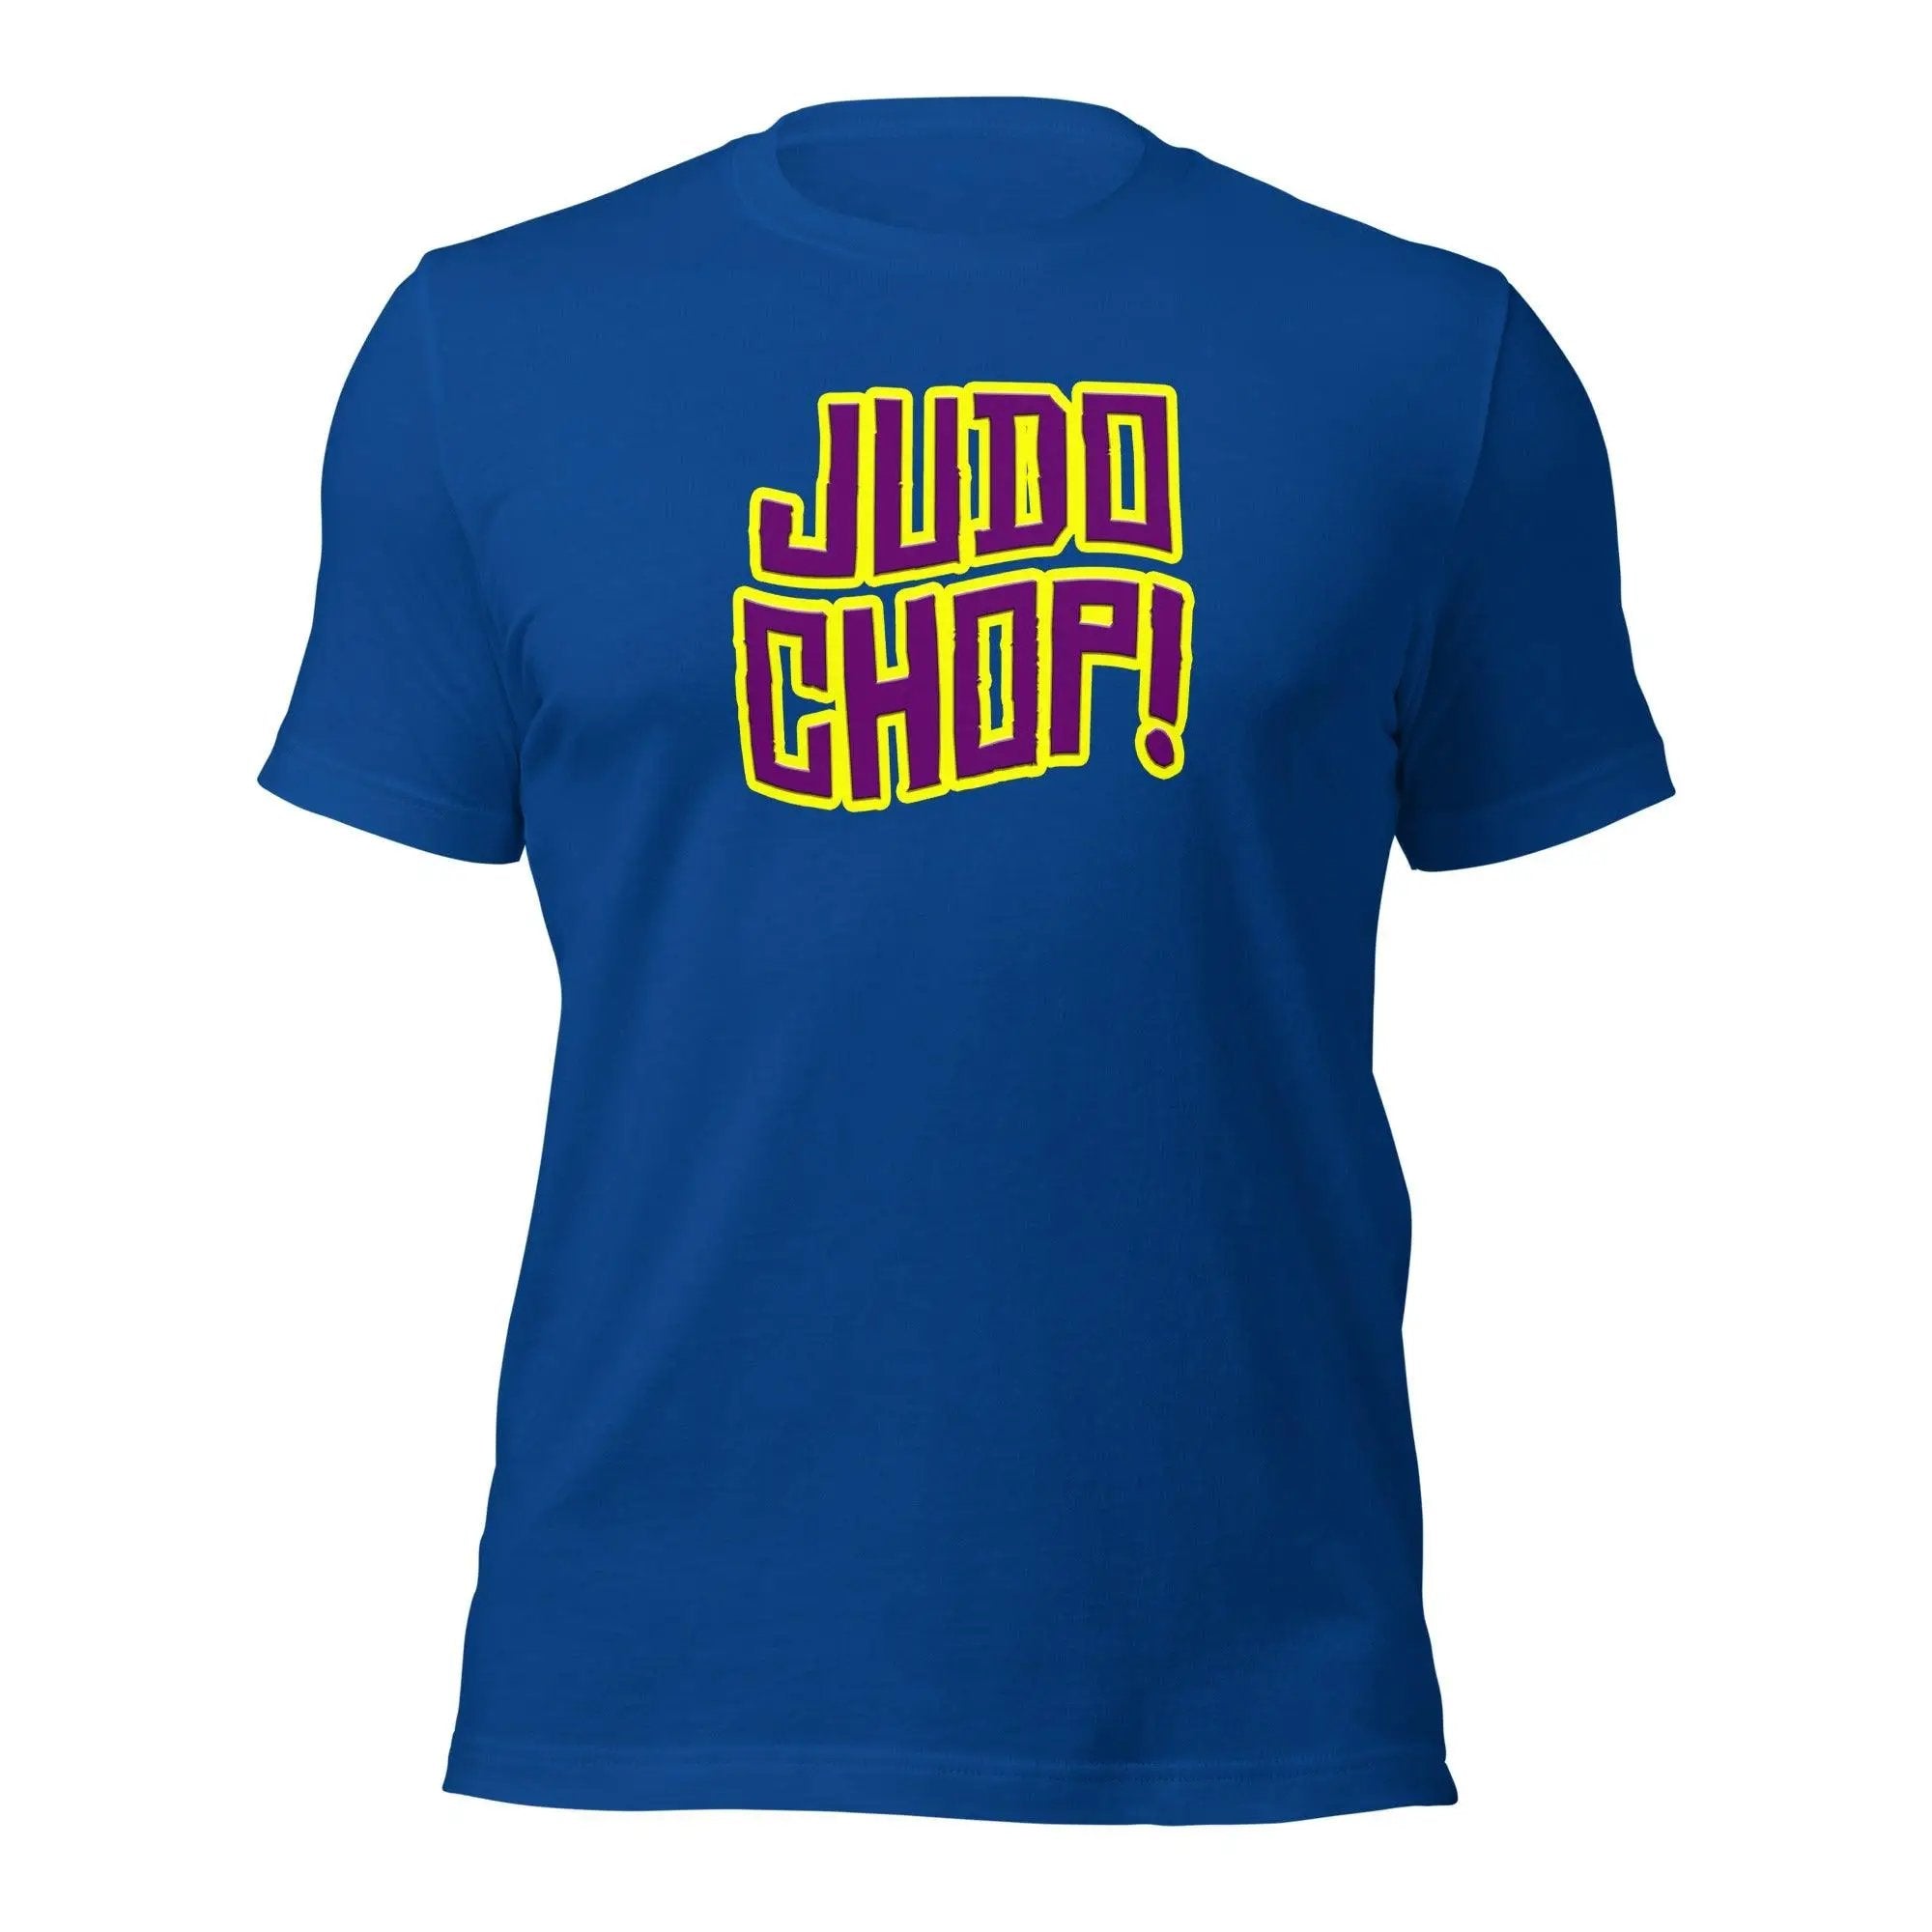 Judo Chop! Unisex t-shirt VAWDesigns